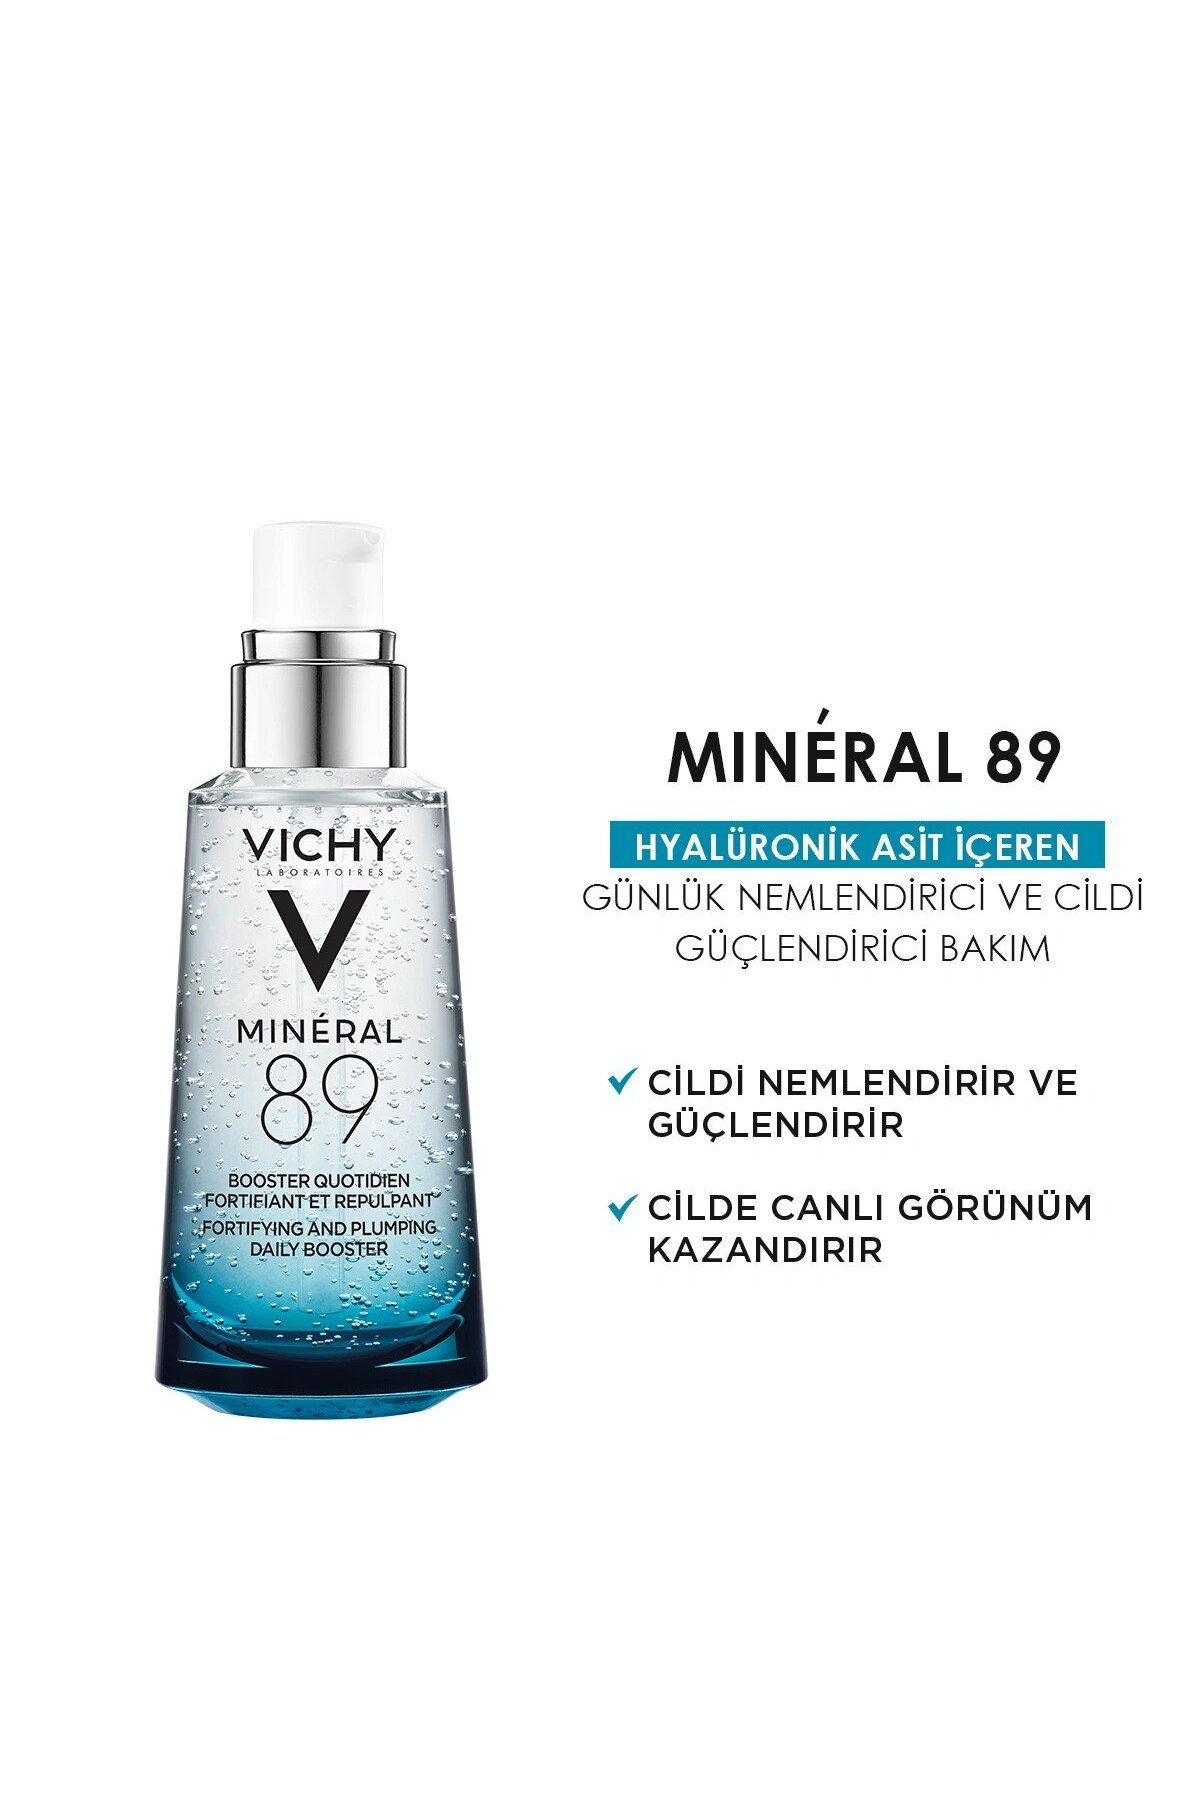 Vichy Mineral 89 Mineralizing Water + Hyaluronic Acid 50 ml Serum Besleyici Ve Nemlendirici